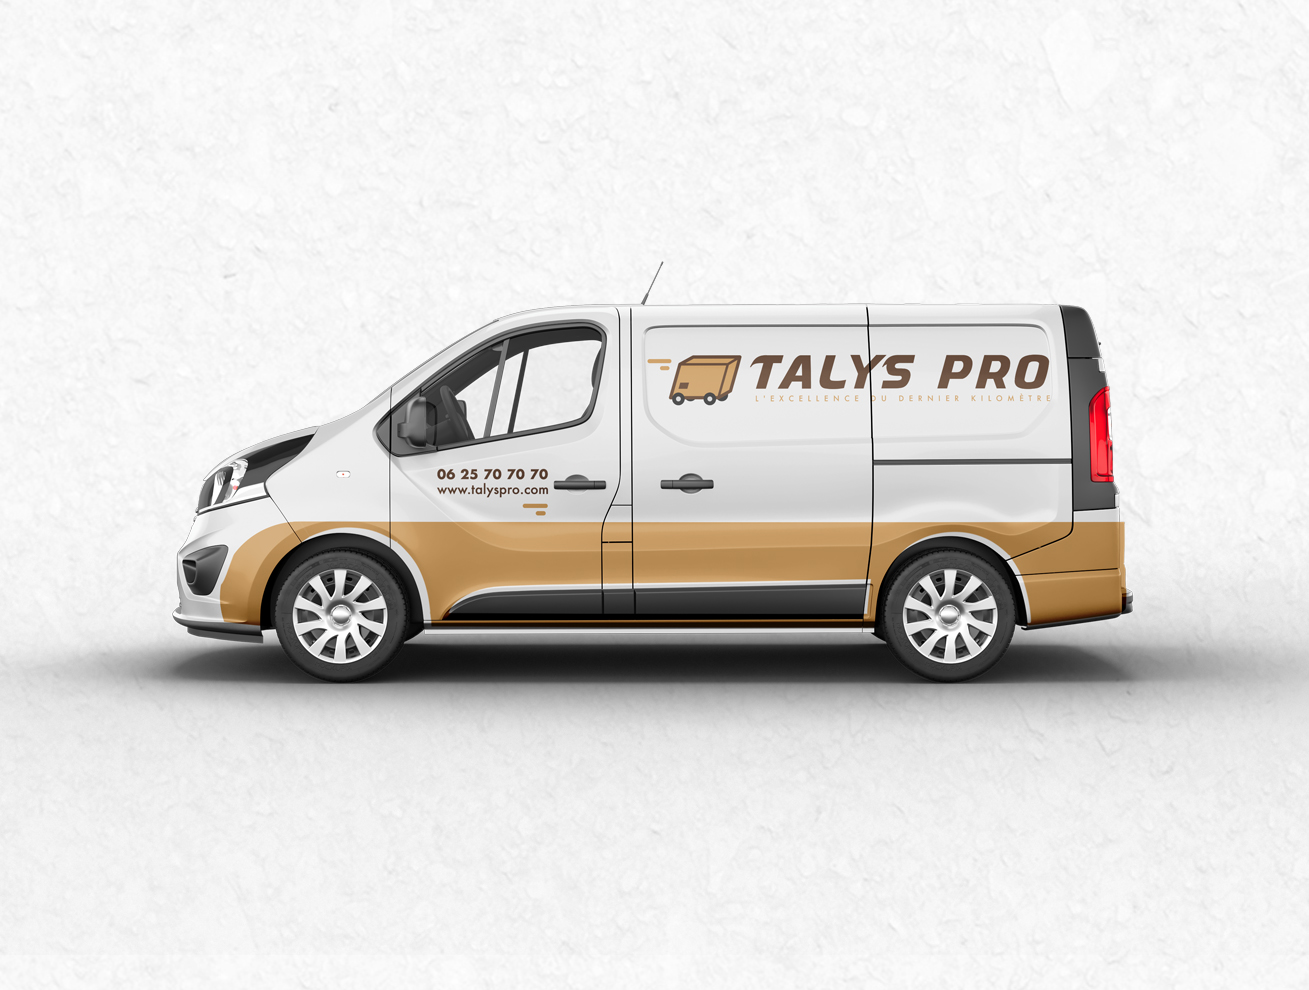 Talys Pro